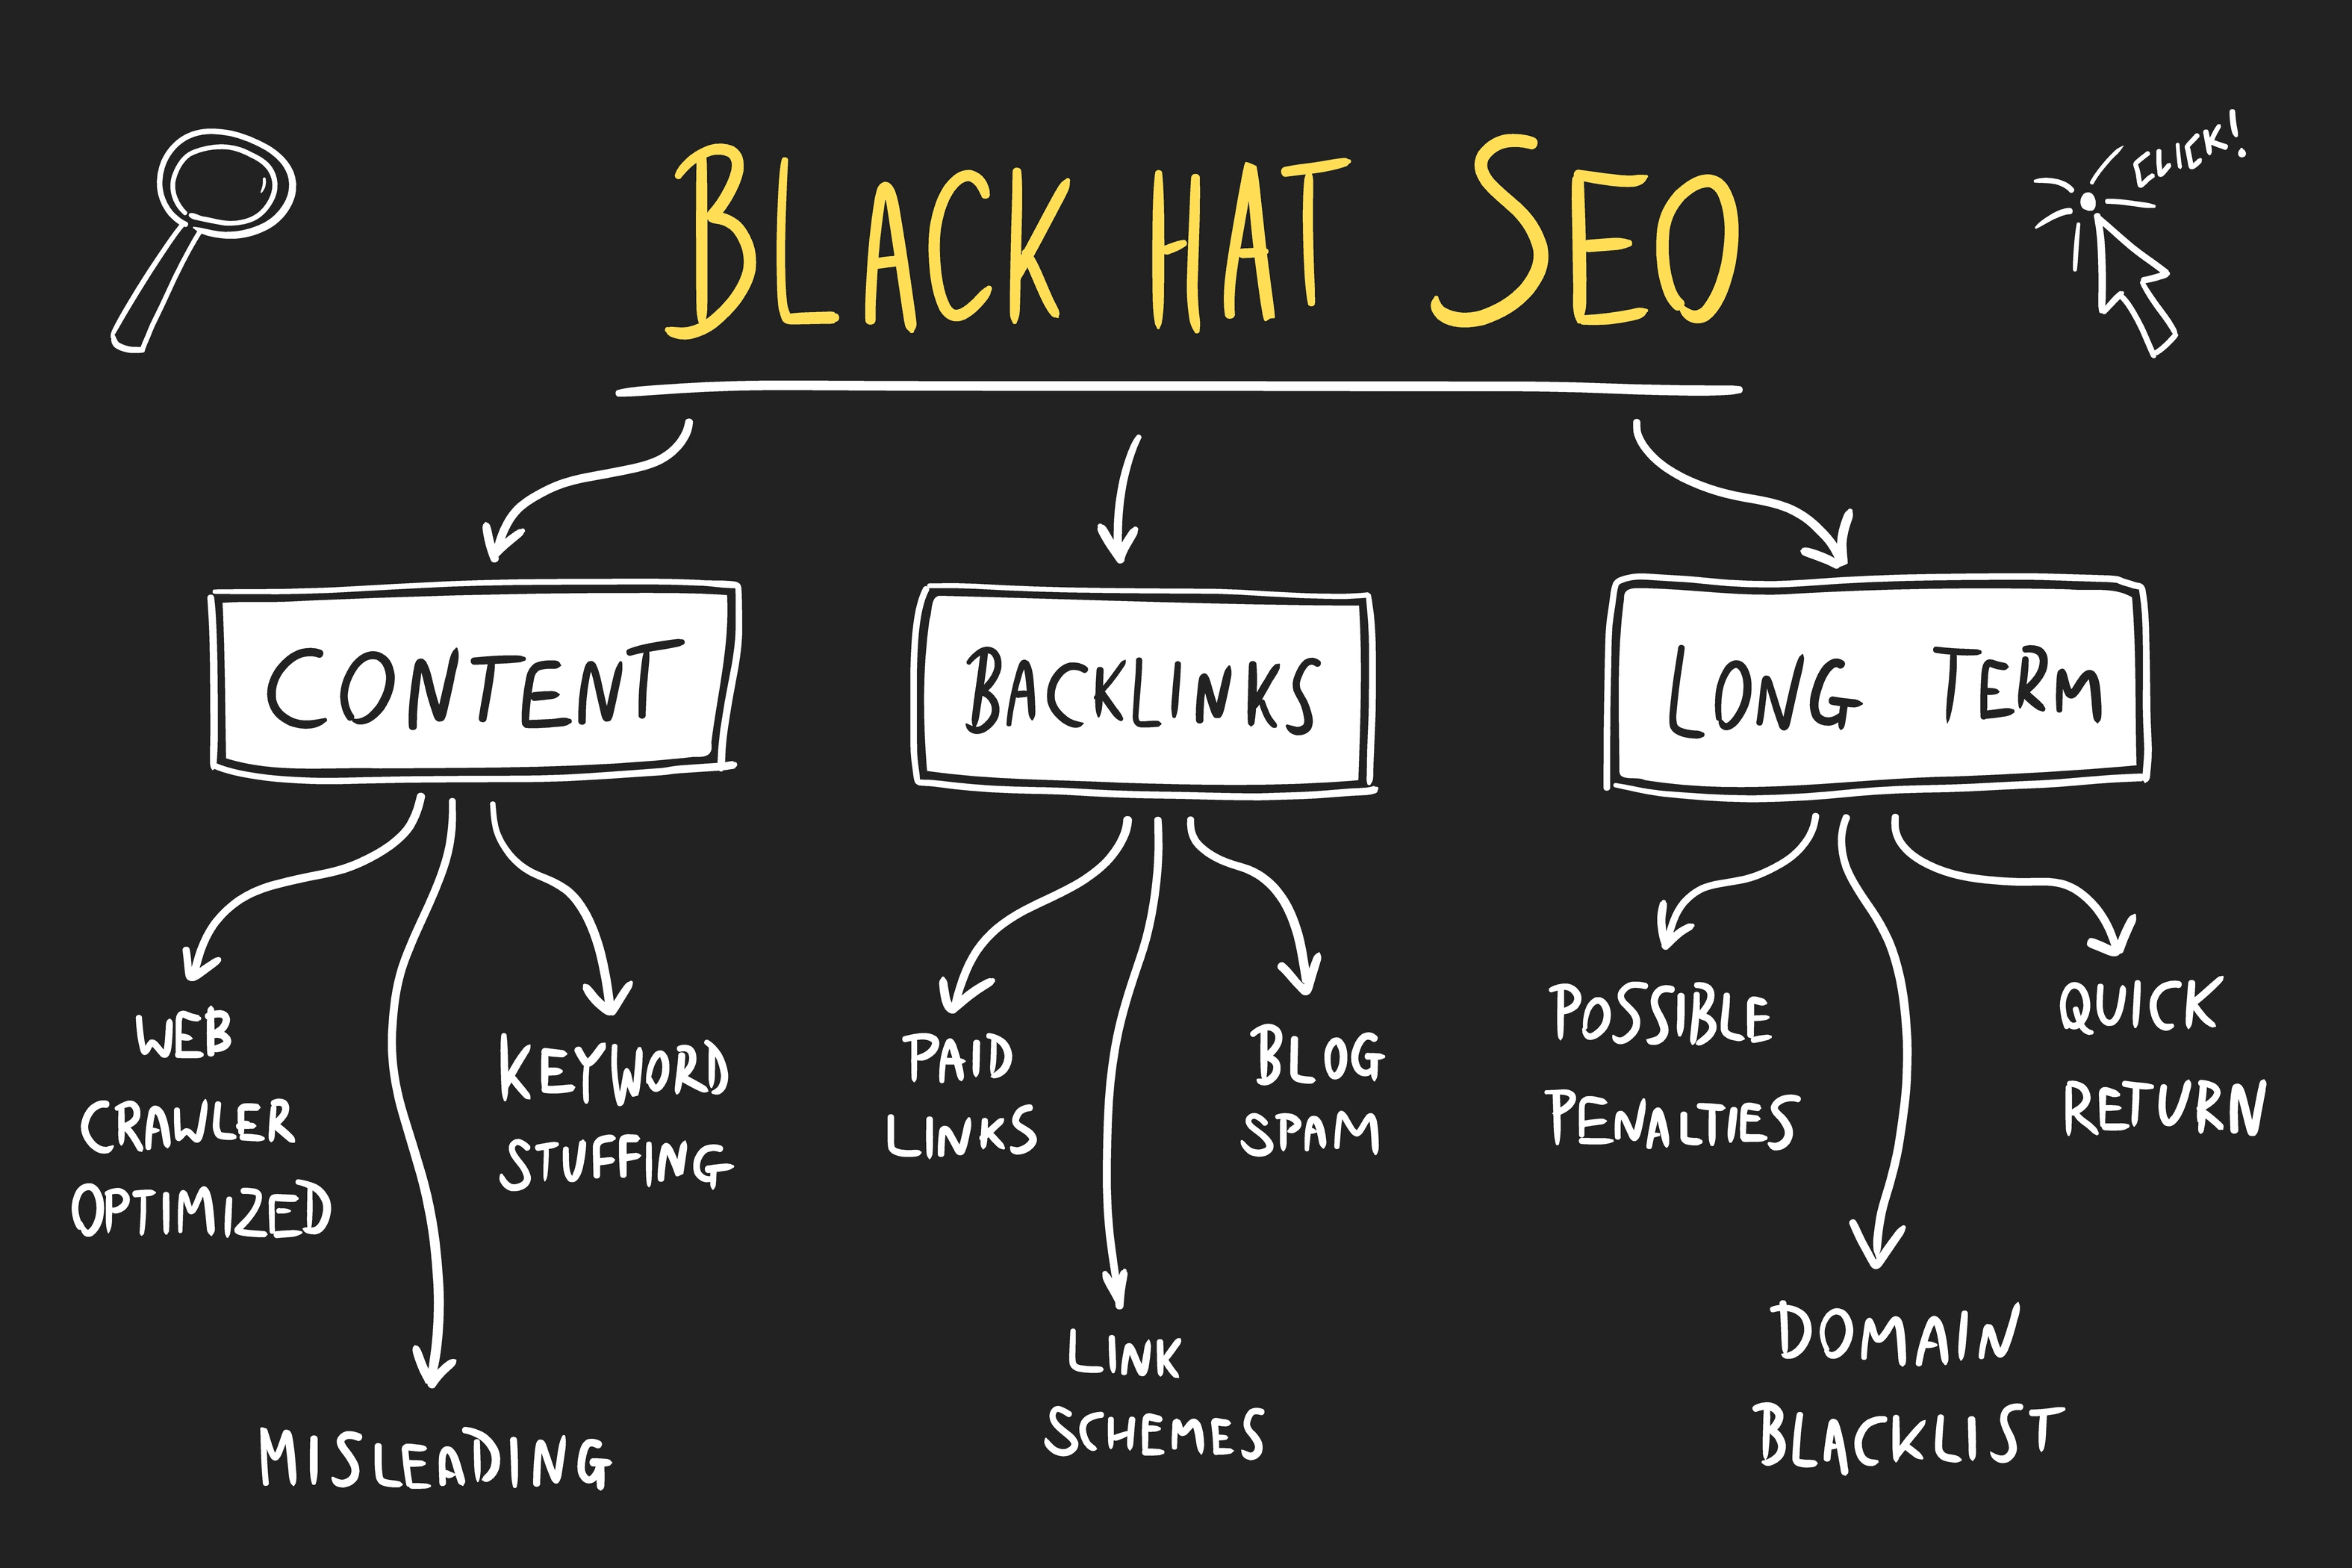 black hat seo_SEO - search engine optimization marketing. Black hat SEO digital marketing strategies. Online business vector.